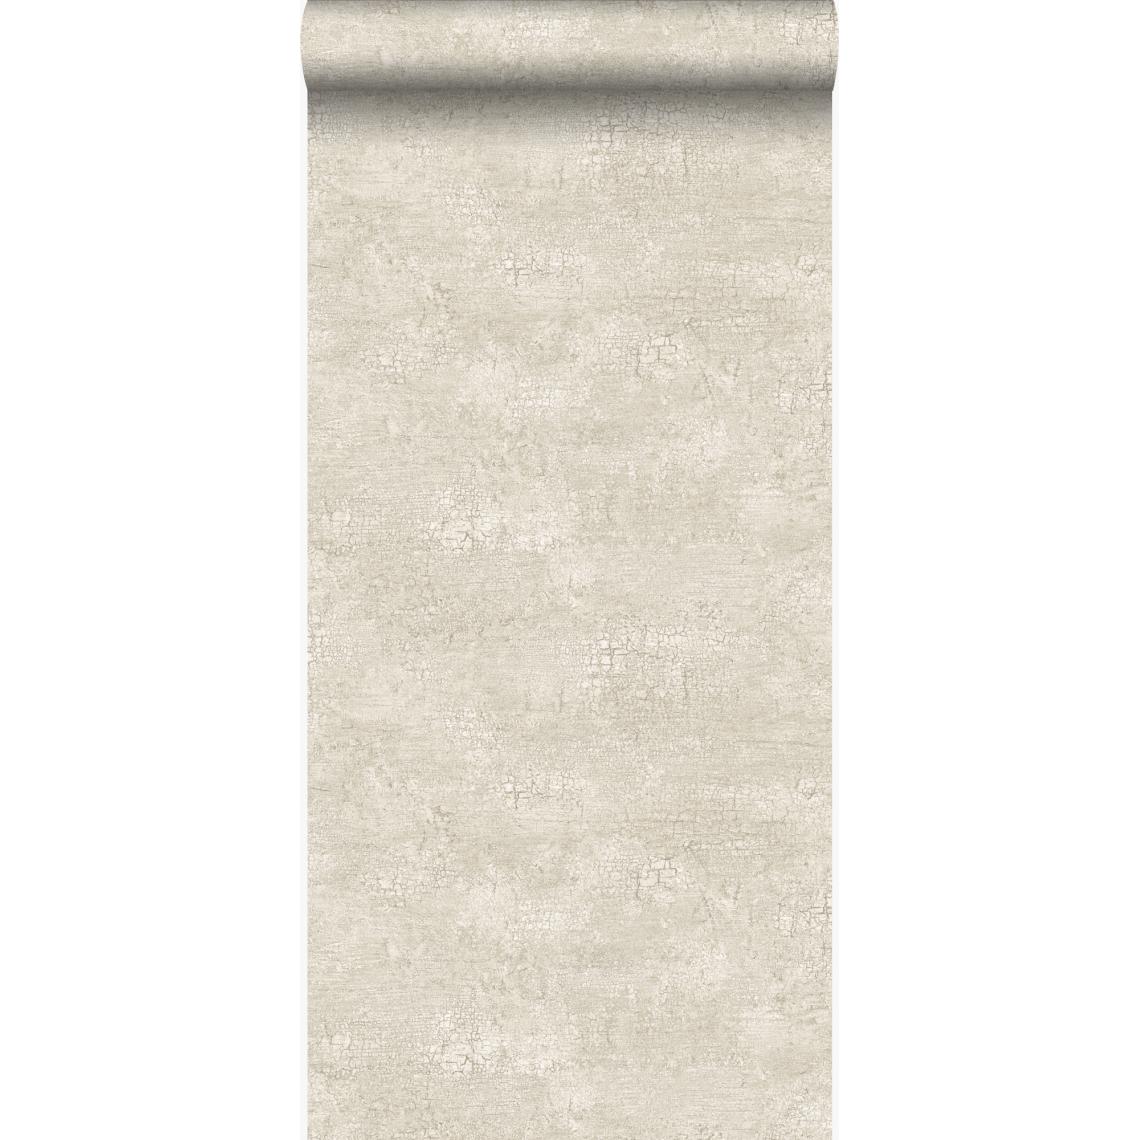 Origin - Origin papier peint imitation pierre beige - 347563 - 53 cm x 10.05 m - Papier peint